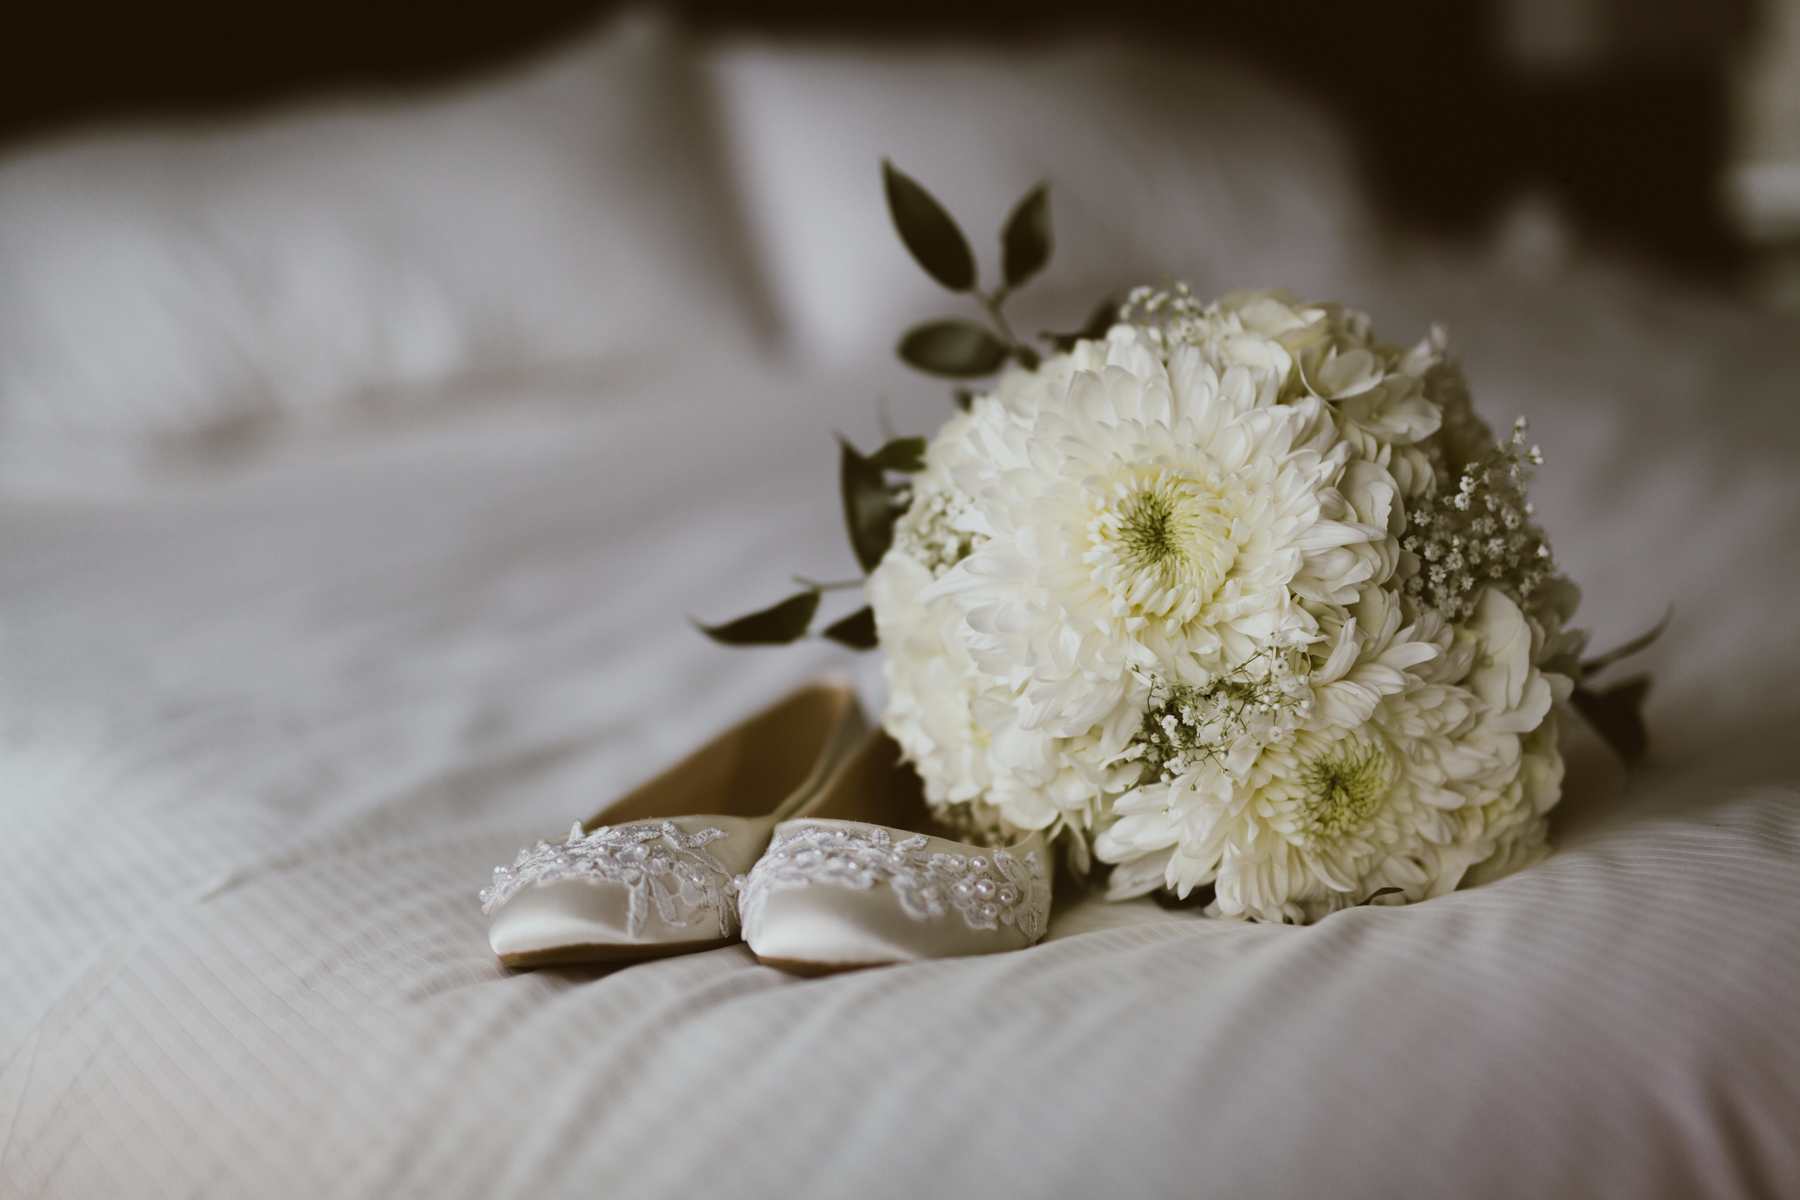 Calgary affordable wedding photography at Heritage Park Wainwright Hotel indoor venue, Alberta - Photo 3